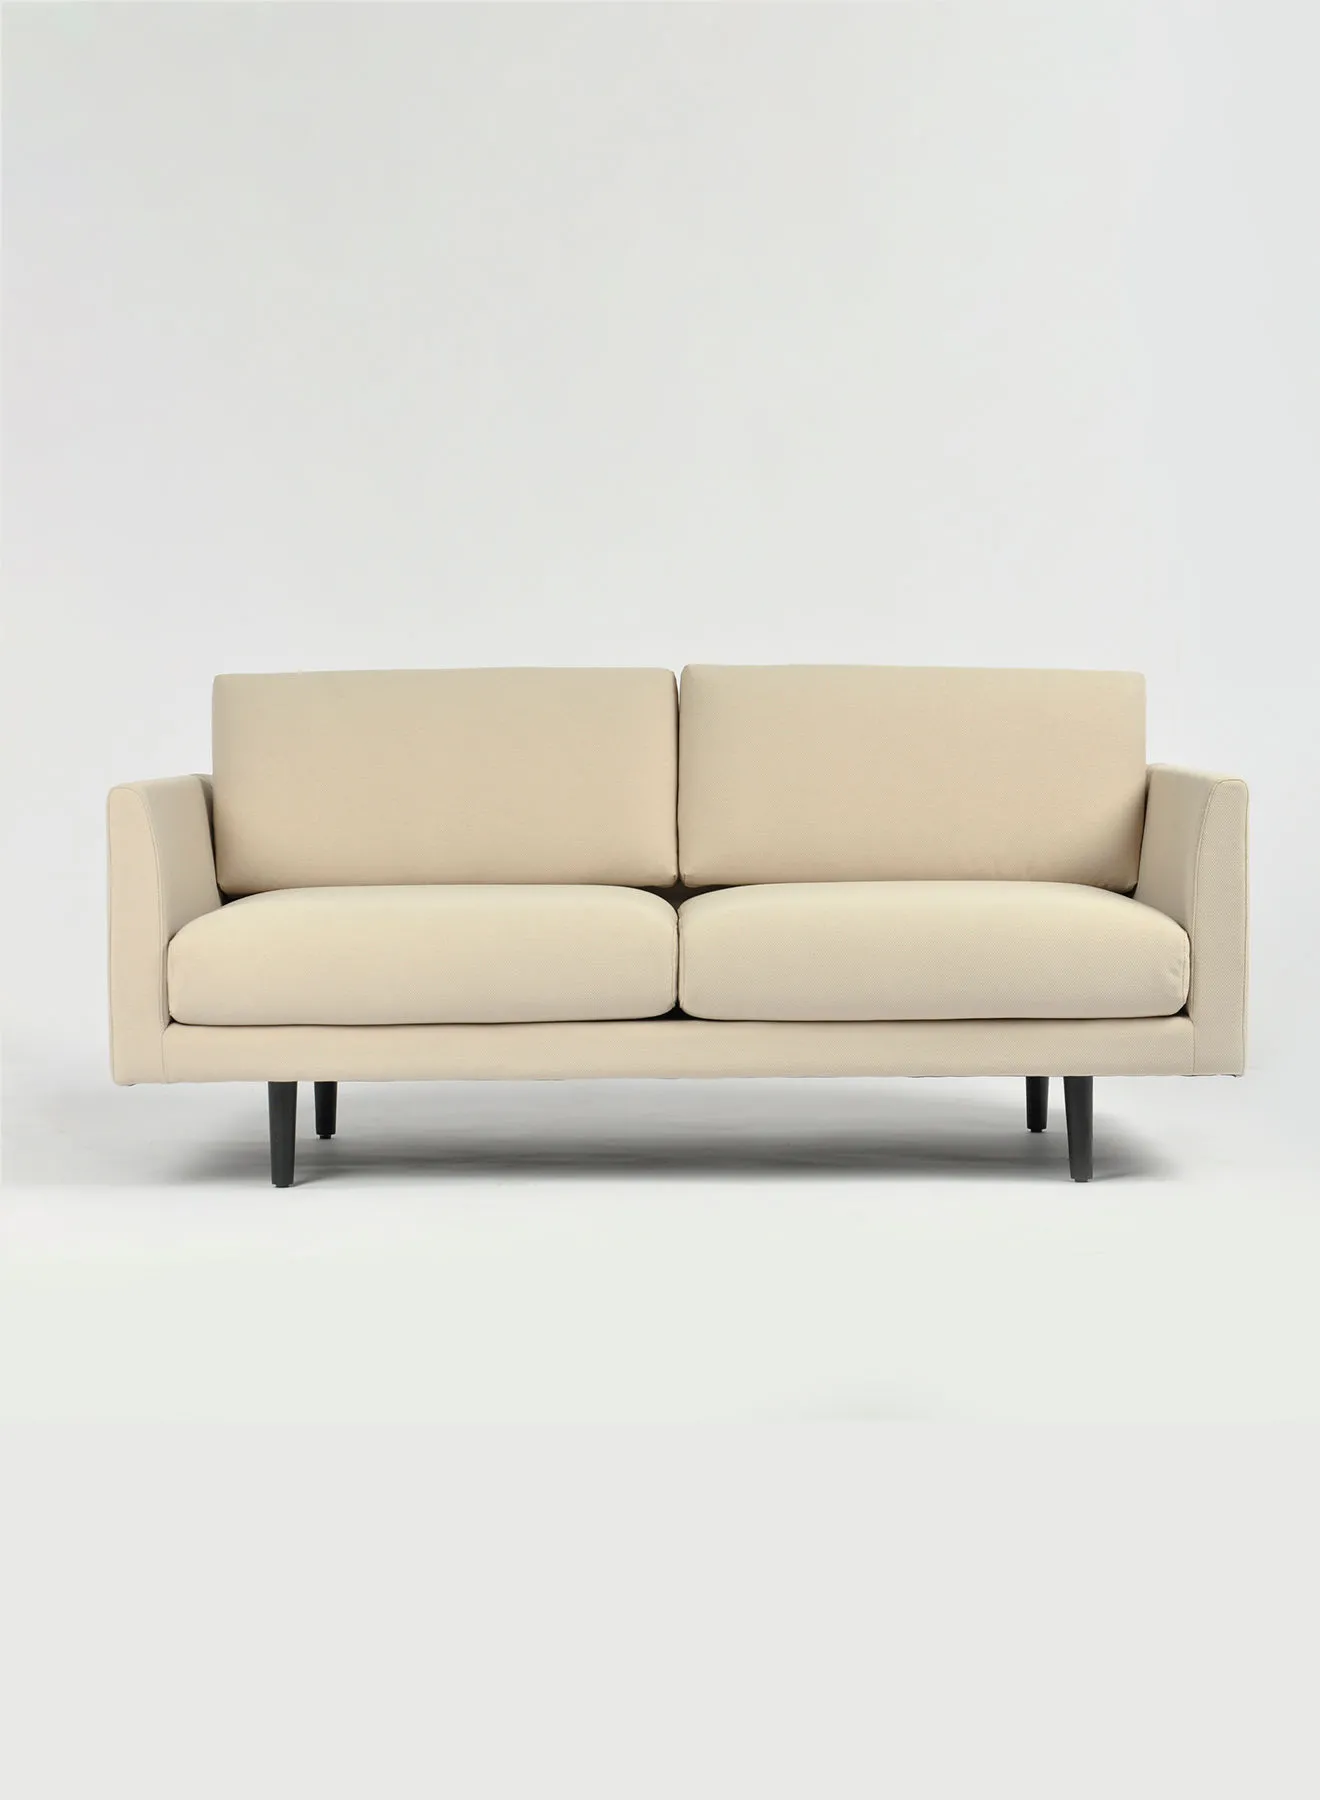 Switch Modern Furniture Living Room Recliner Restaurant Comfortable Sofa creme 180 x 90 x 80cm